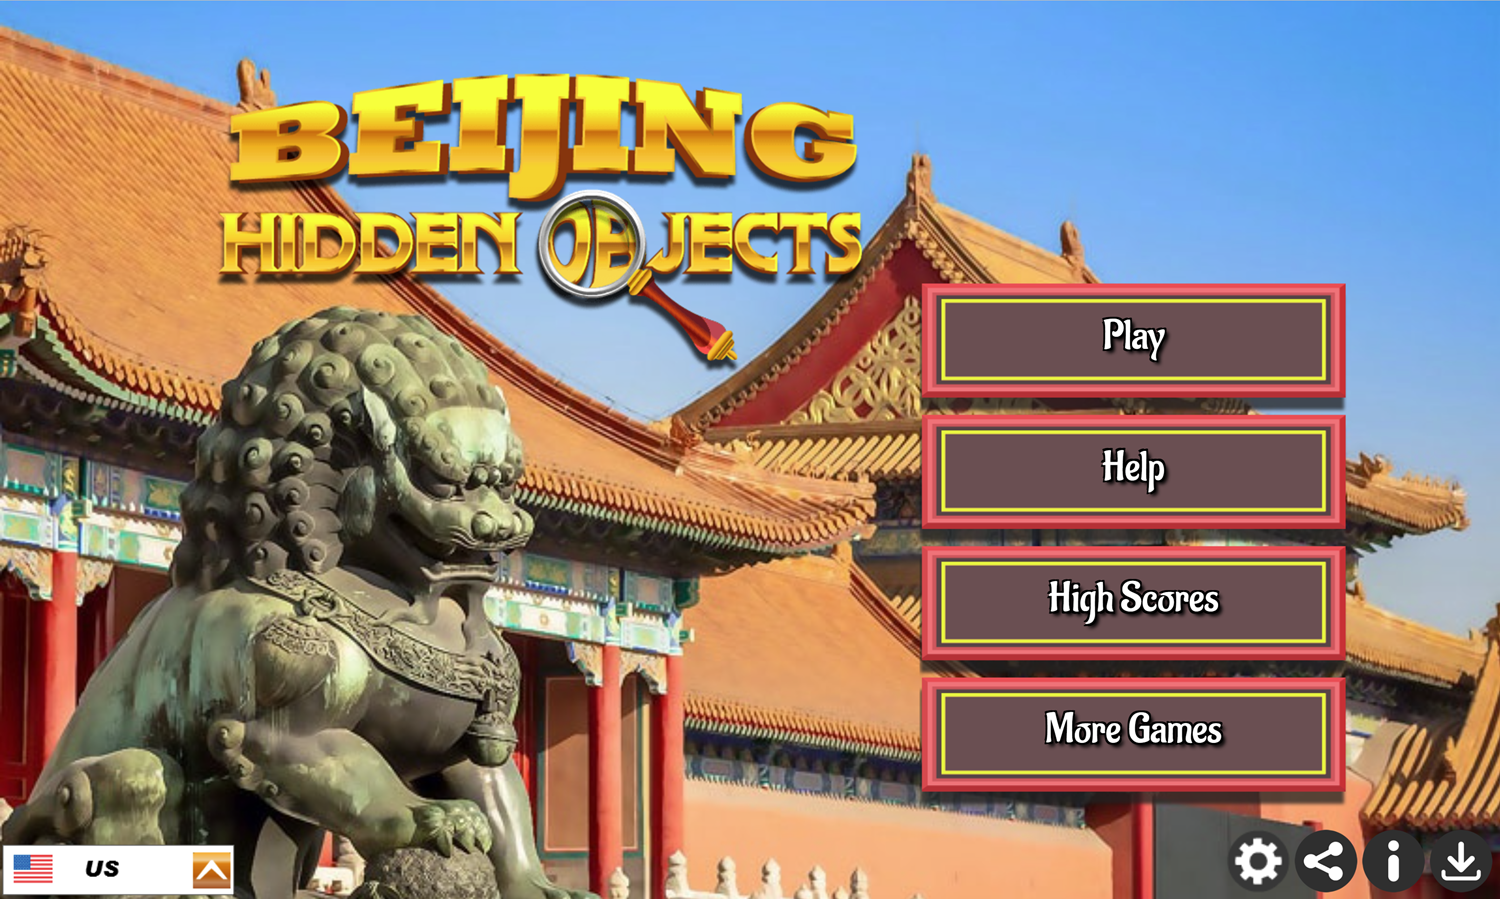 Beijing Hidden Objects Game Welcome Screen Screenshot.